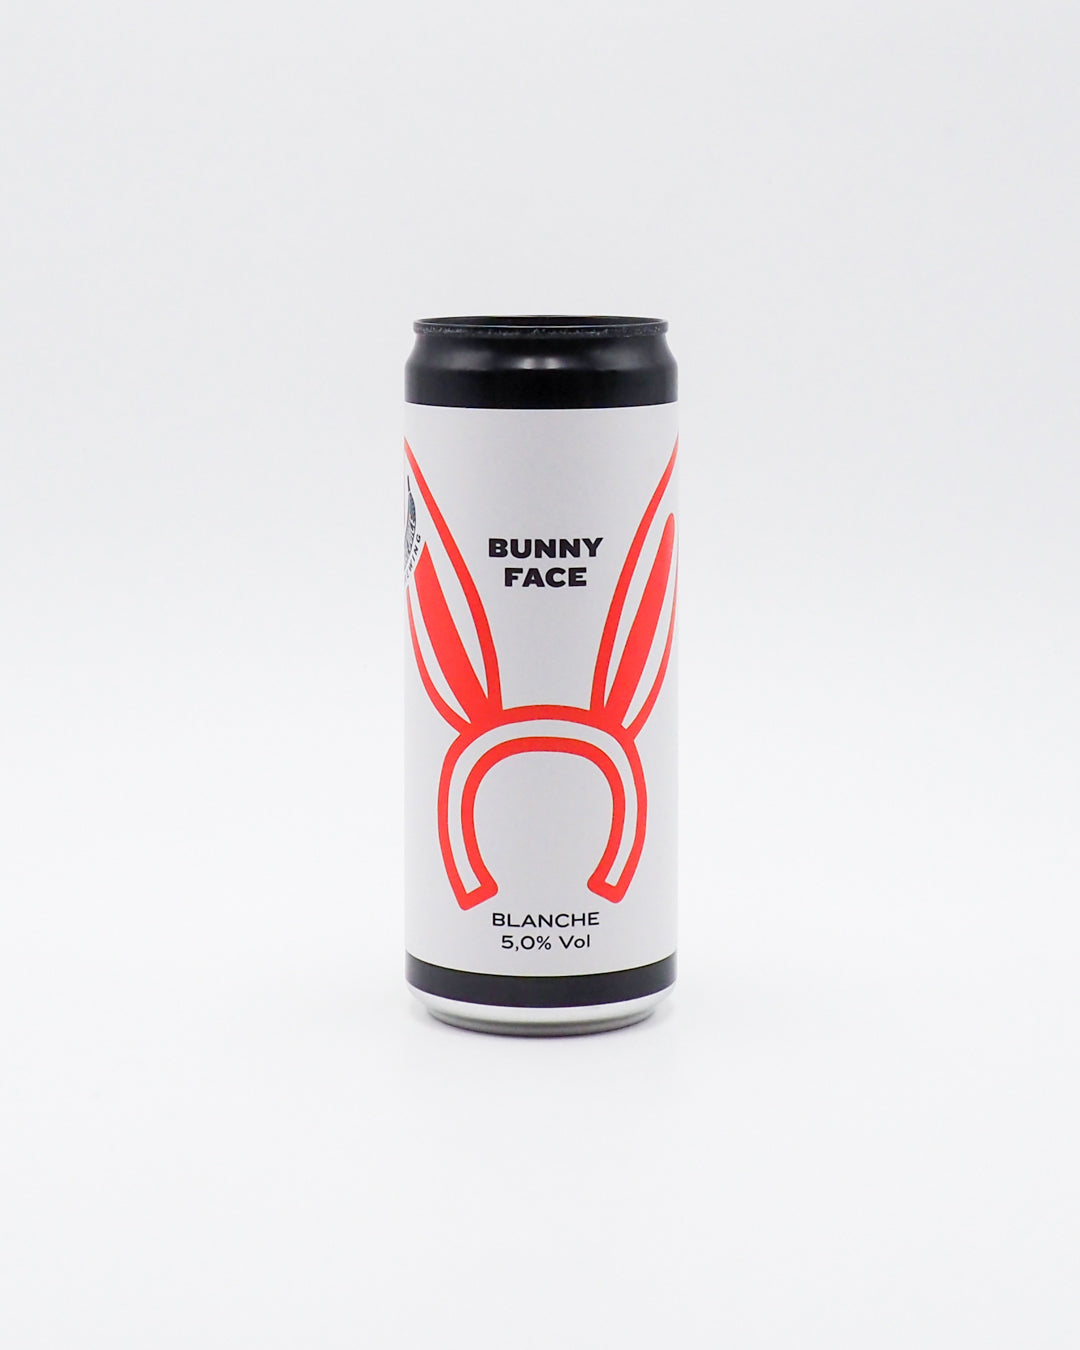 birra-bunny-face-blanche-jungle-juice-brewery-5-33cl